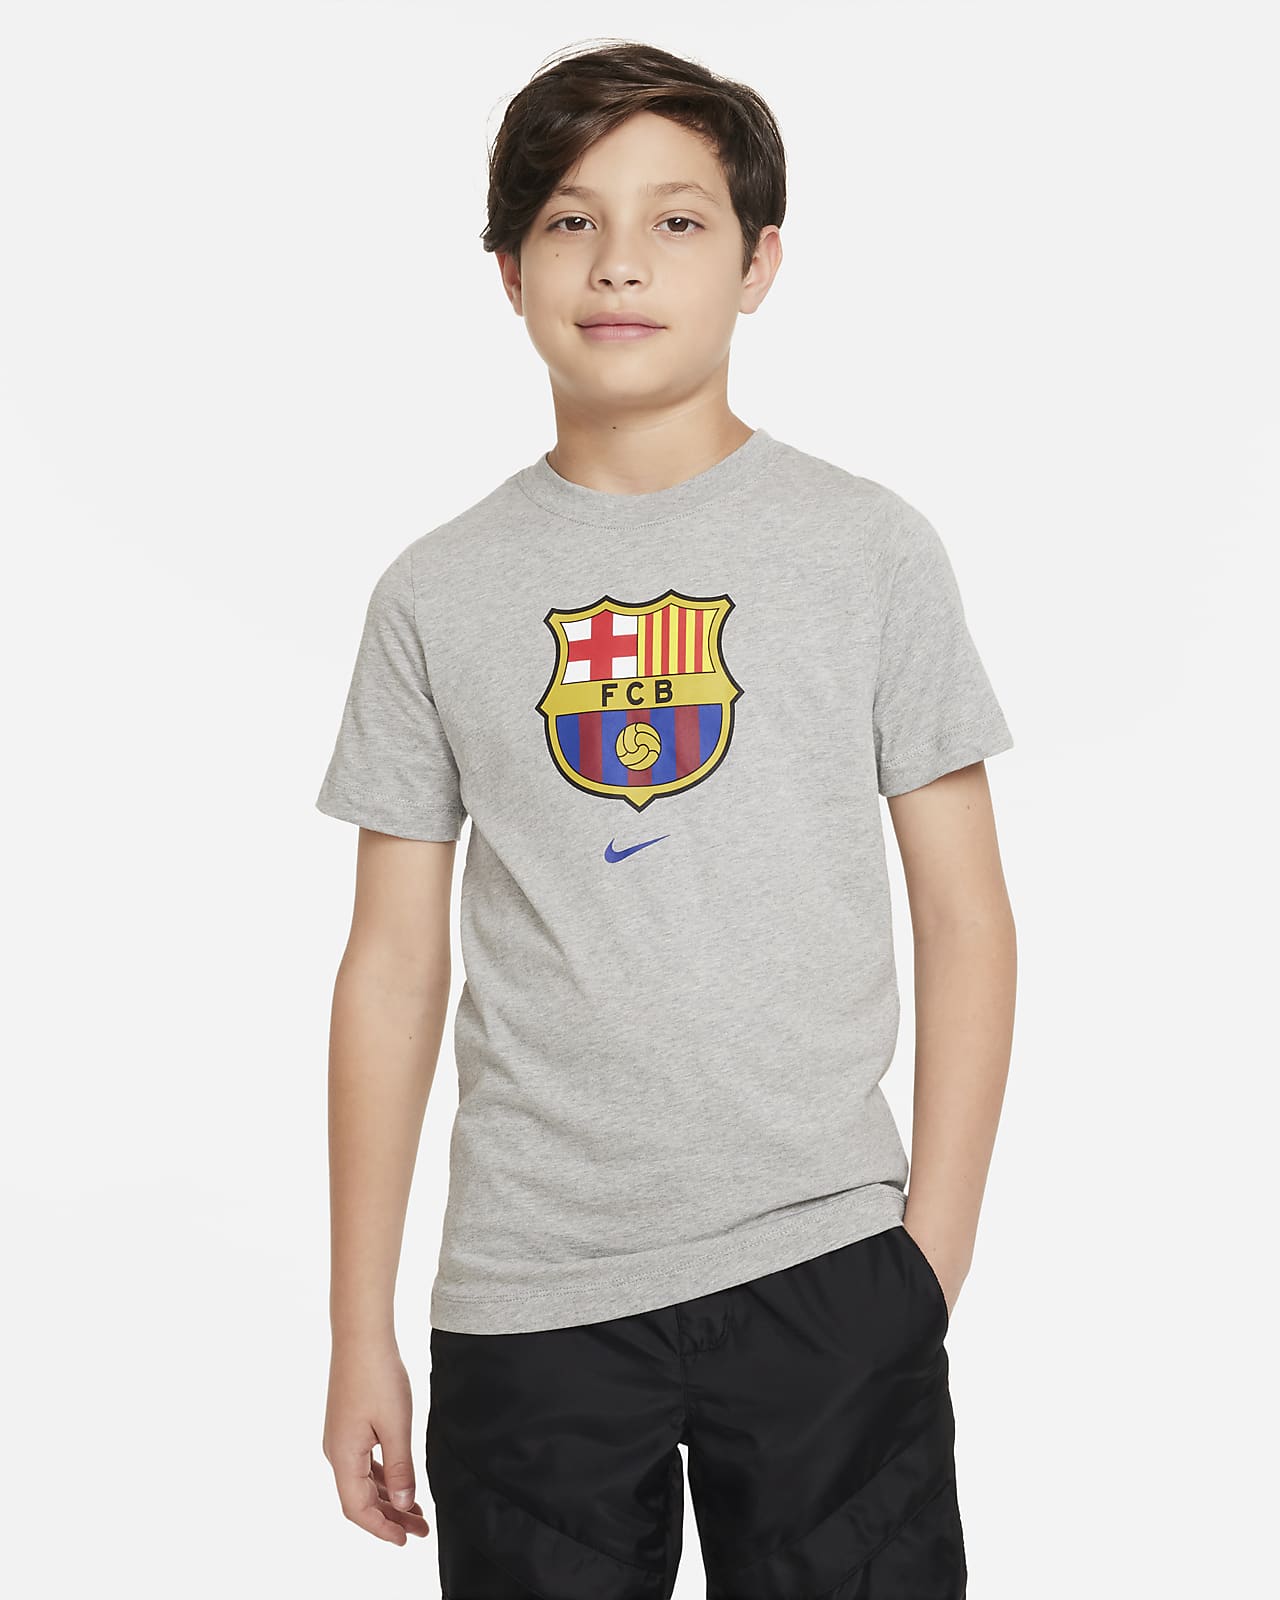 FC Barcelona Crest Nike T-Shirt für ältere Kinder